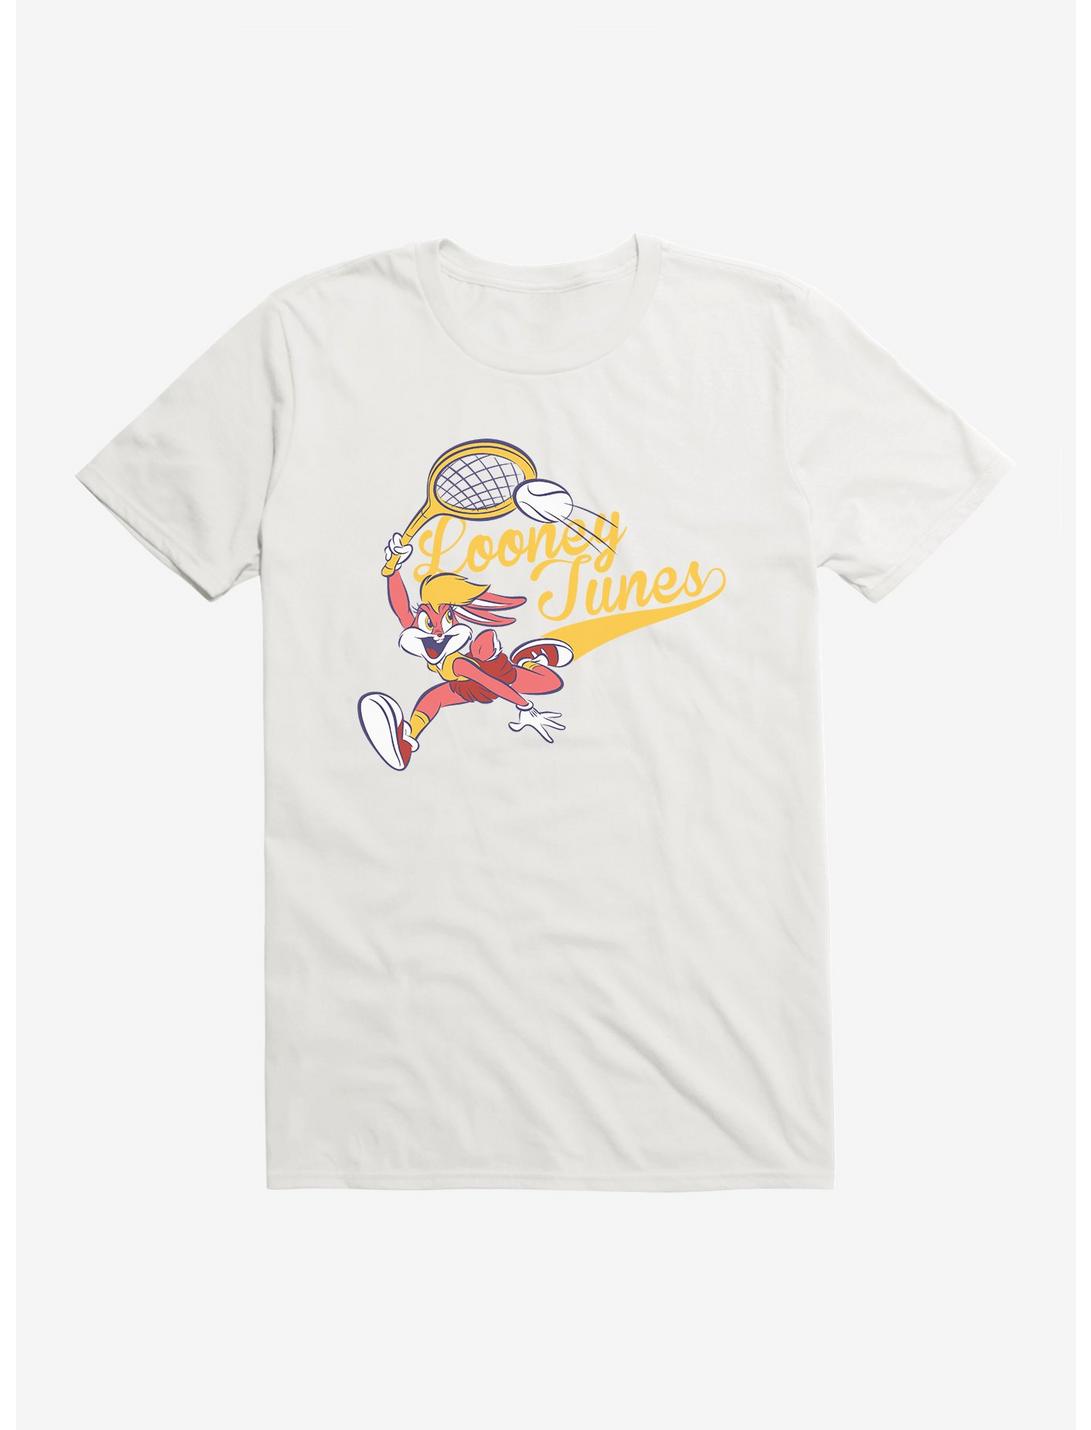 Looney Tunes Bugs Bunny Tennis T-Shirt, , hi-res